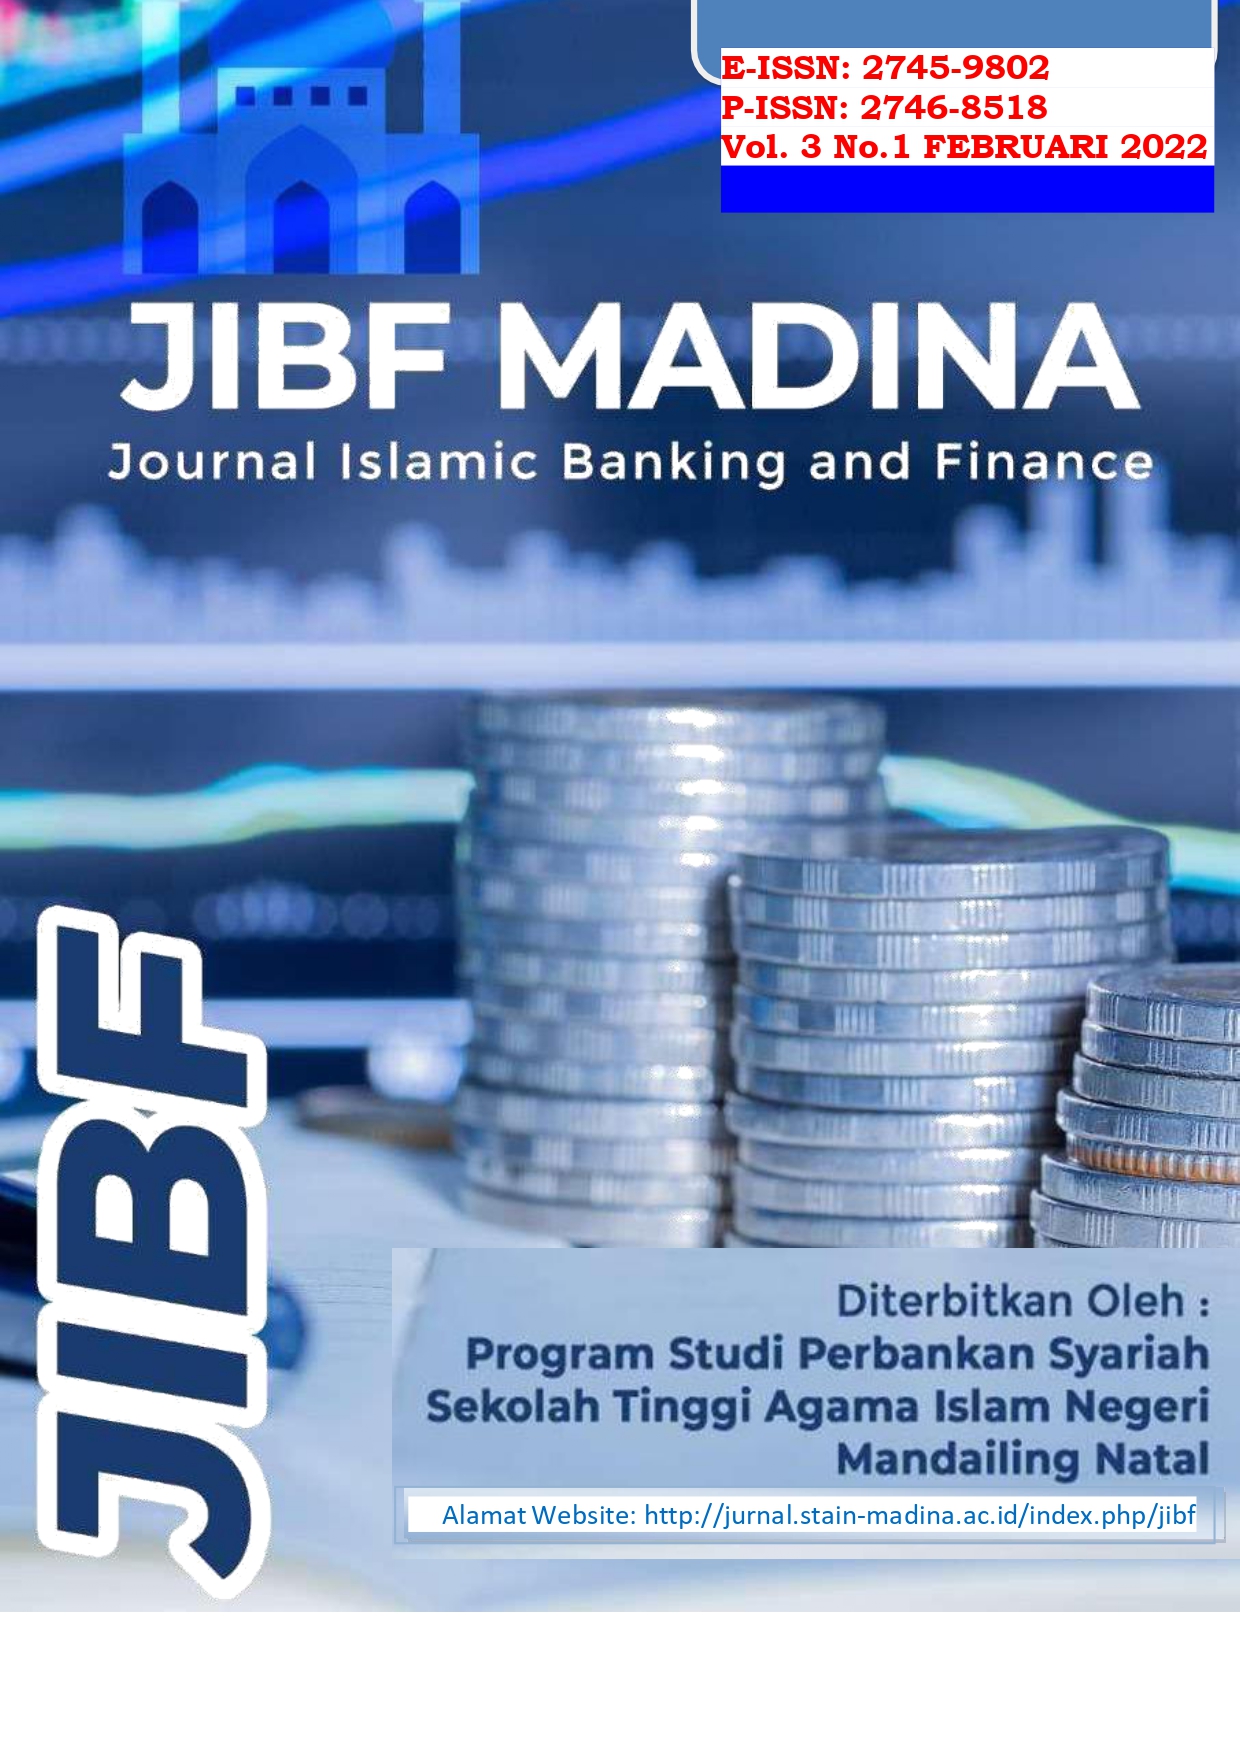 JIBF MADINA: JOURNAL ISLAMIC BANKING AND FINANCE MADINA